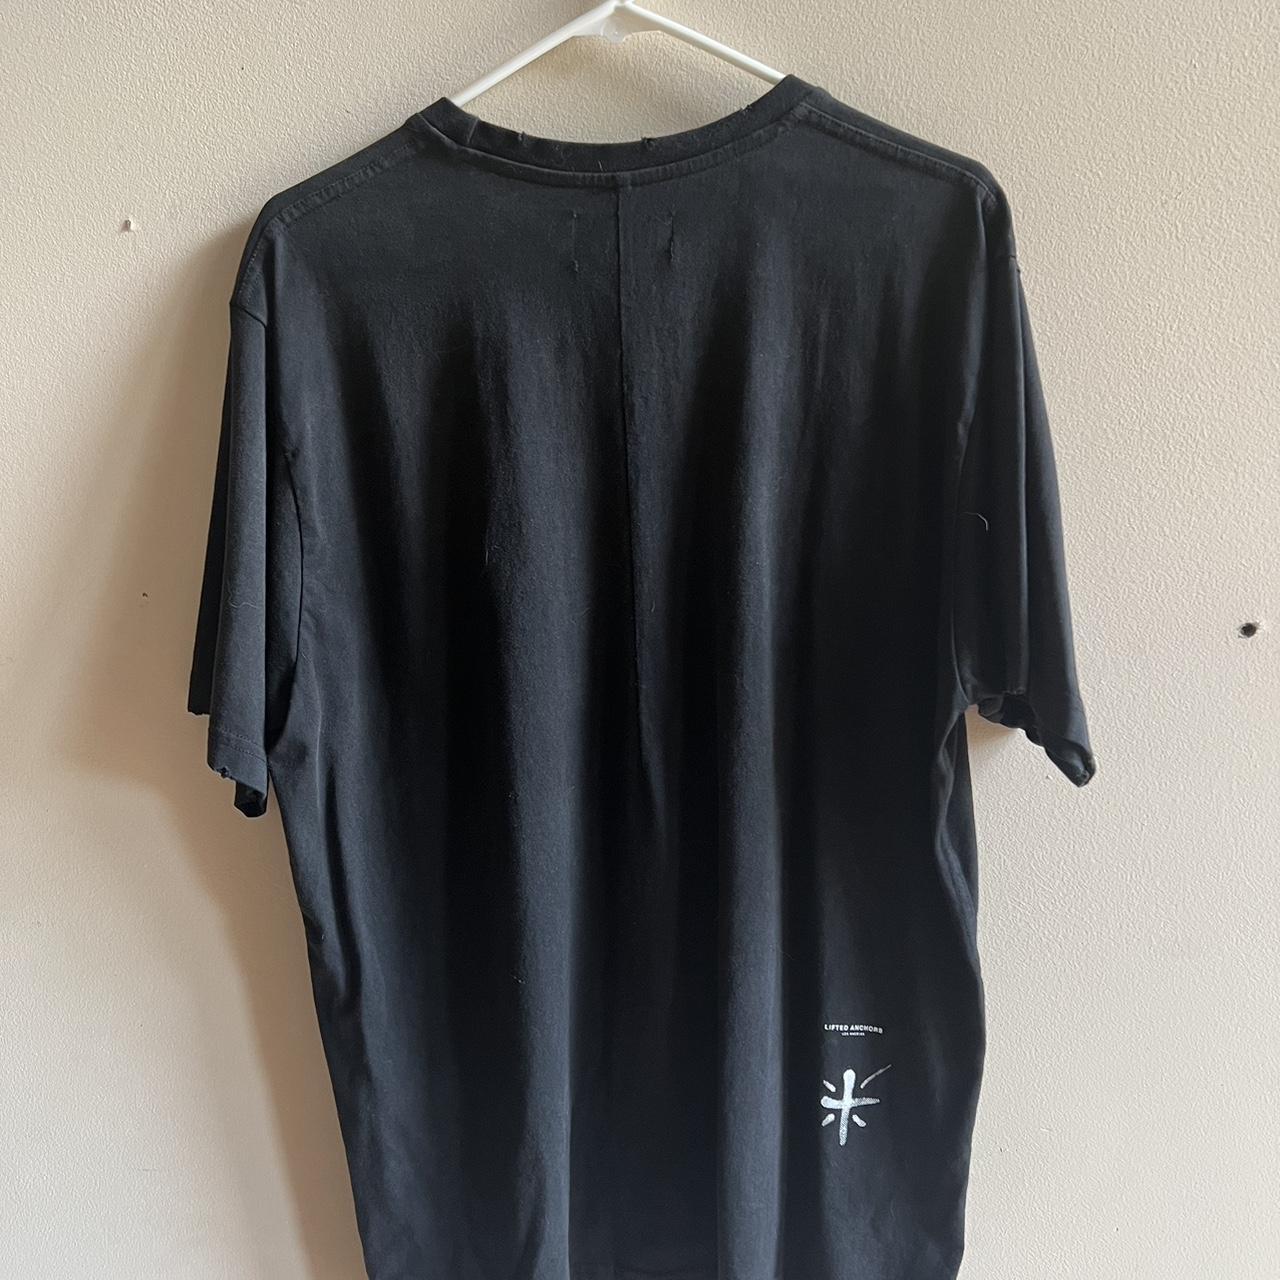 Lifted Anchors Men's Black T-shirt (2)